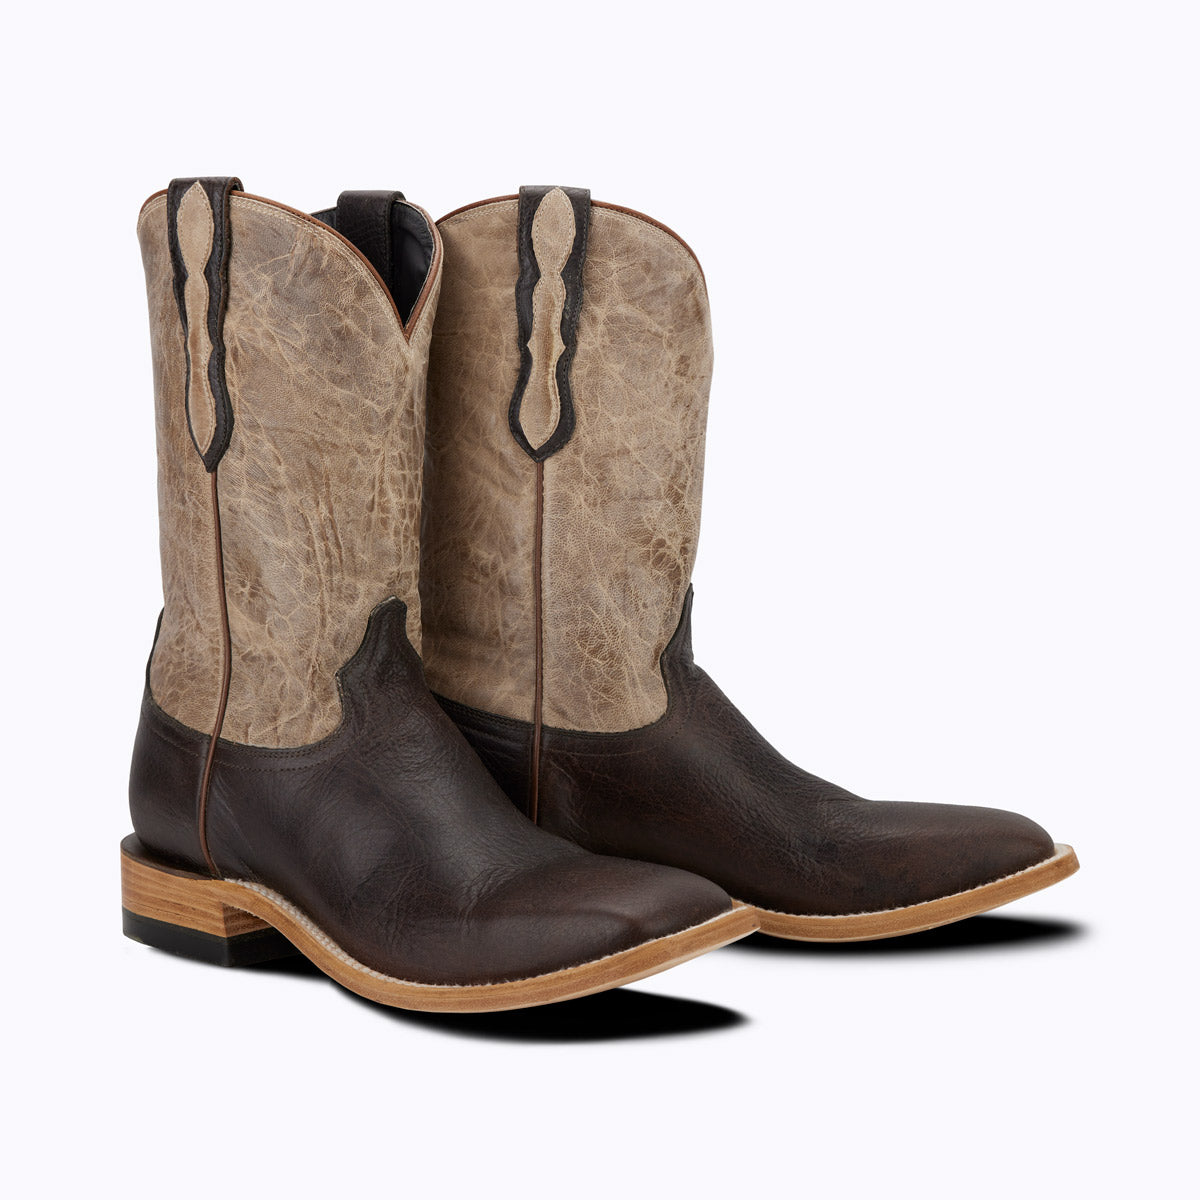 Jackson - Sale Mens Western Boot - Capitan Boots